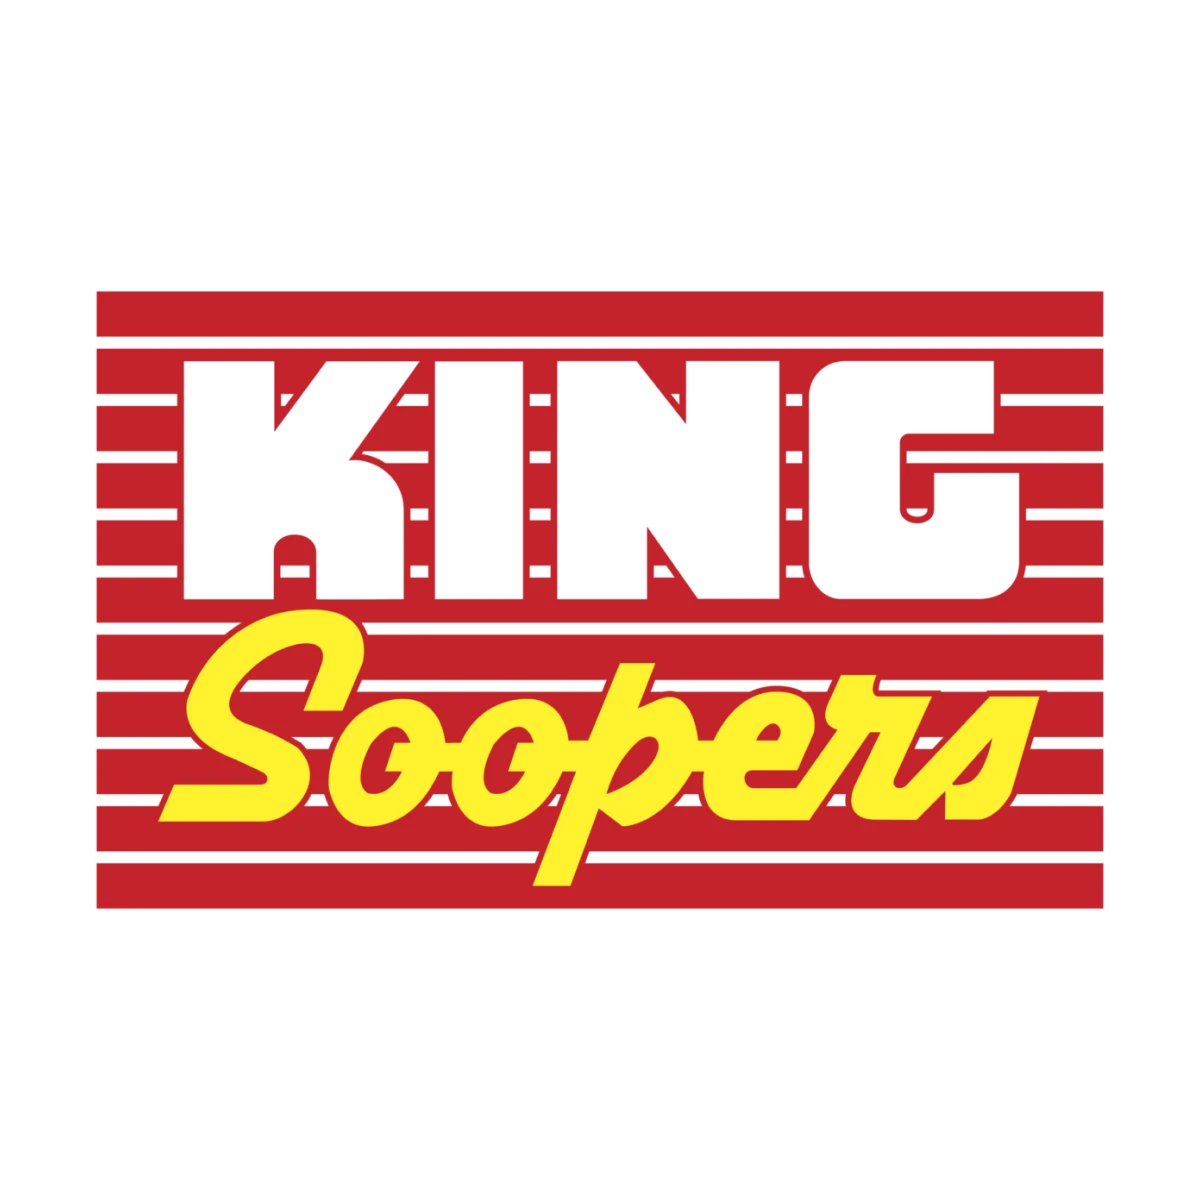 King Scooper grocery store horizontal logo